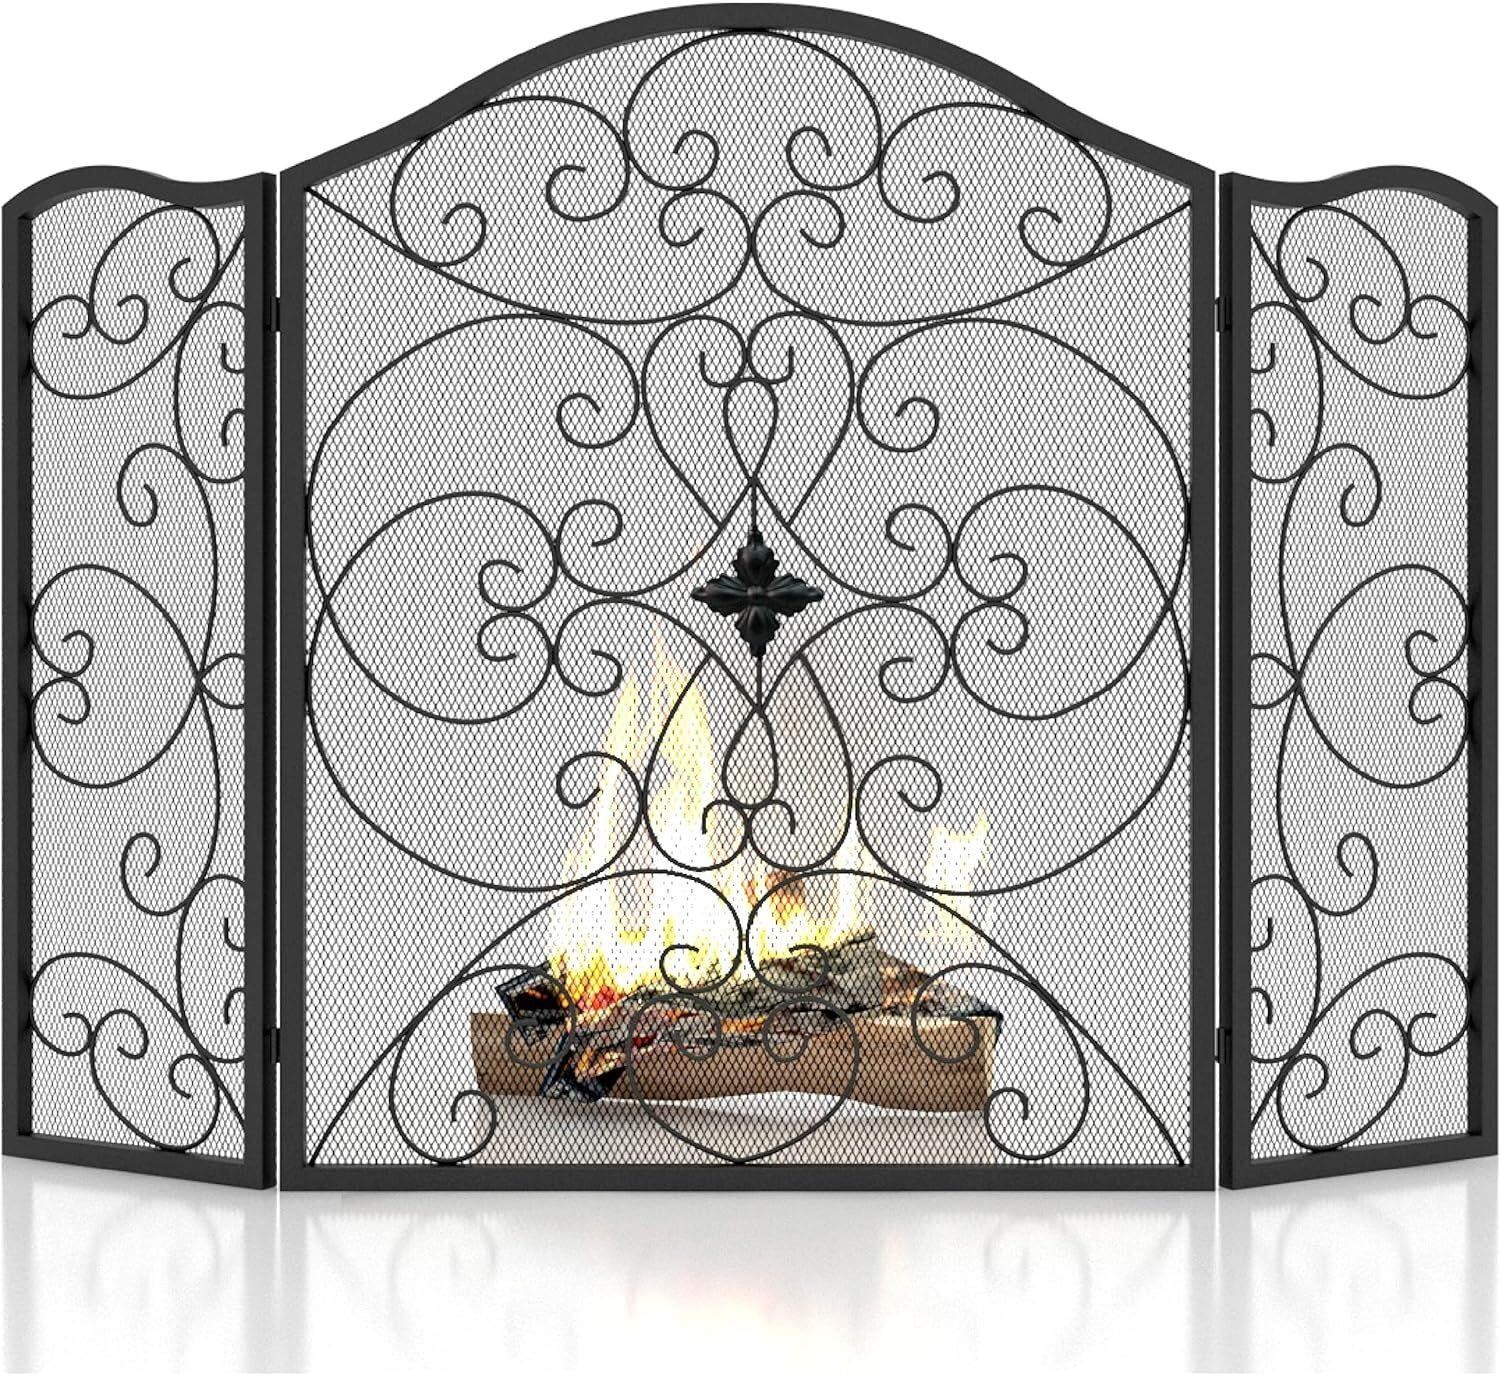 SCENDOR Fireplace Screen 50x36 3 Panel Iron